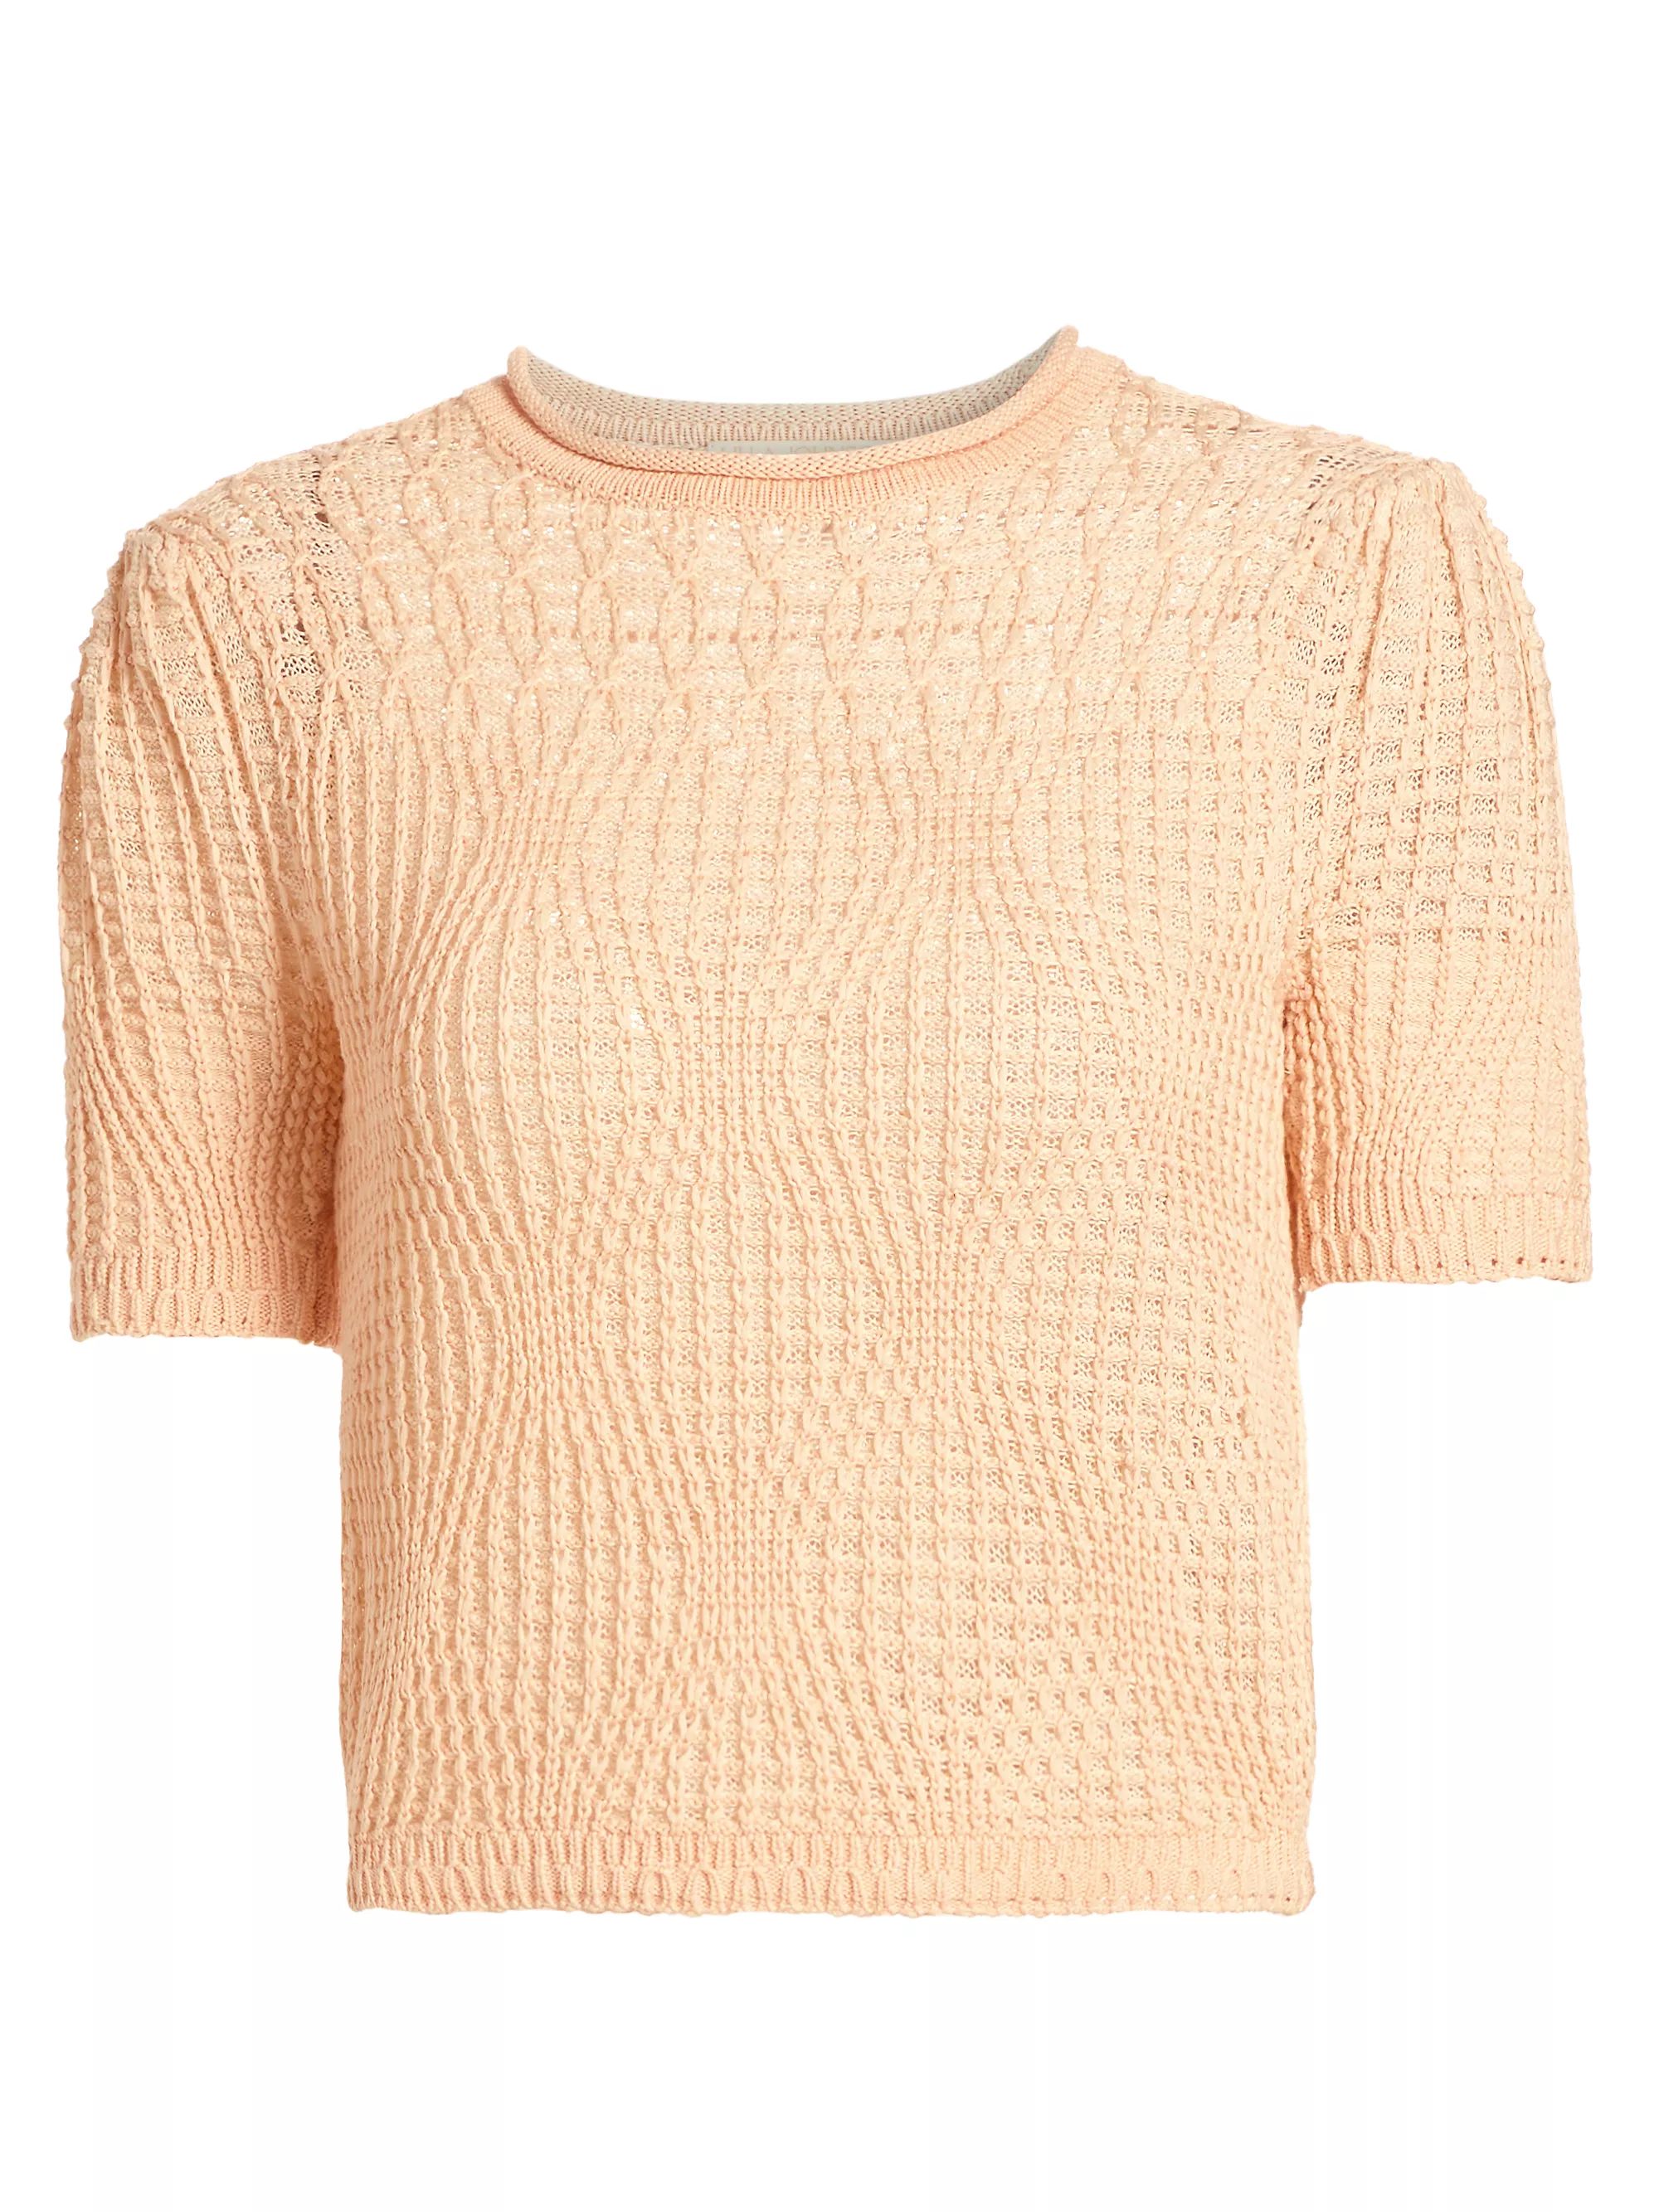 Capri Knit Cotton Short-Sleeve Top | Saks Fifth Avenue